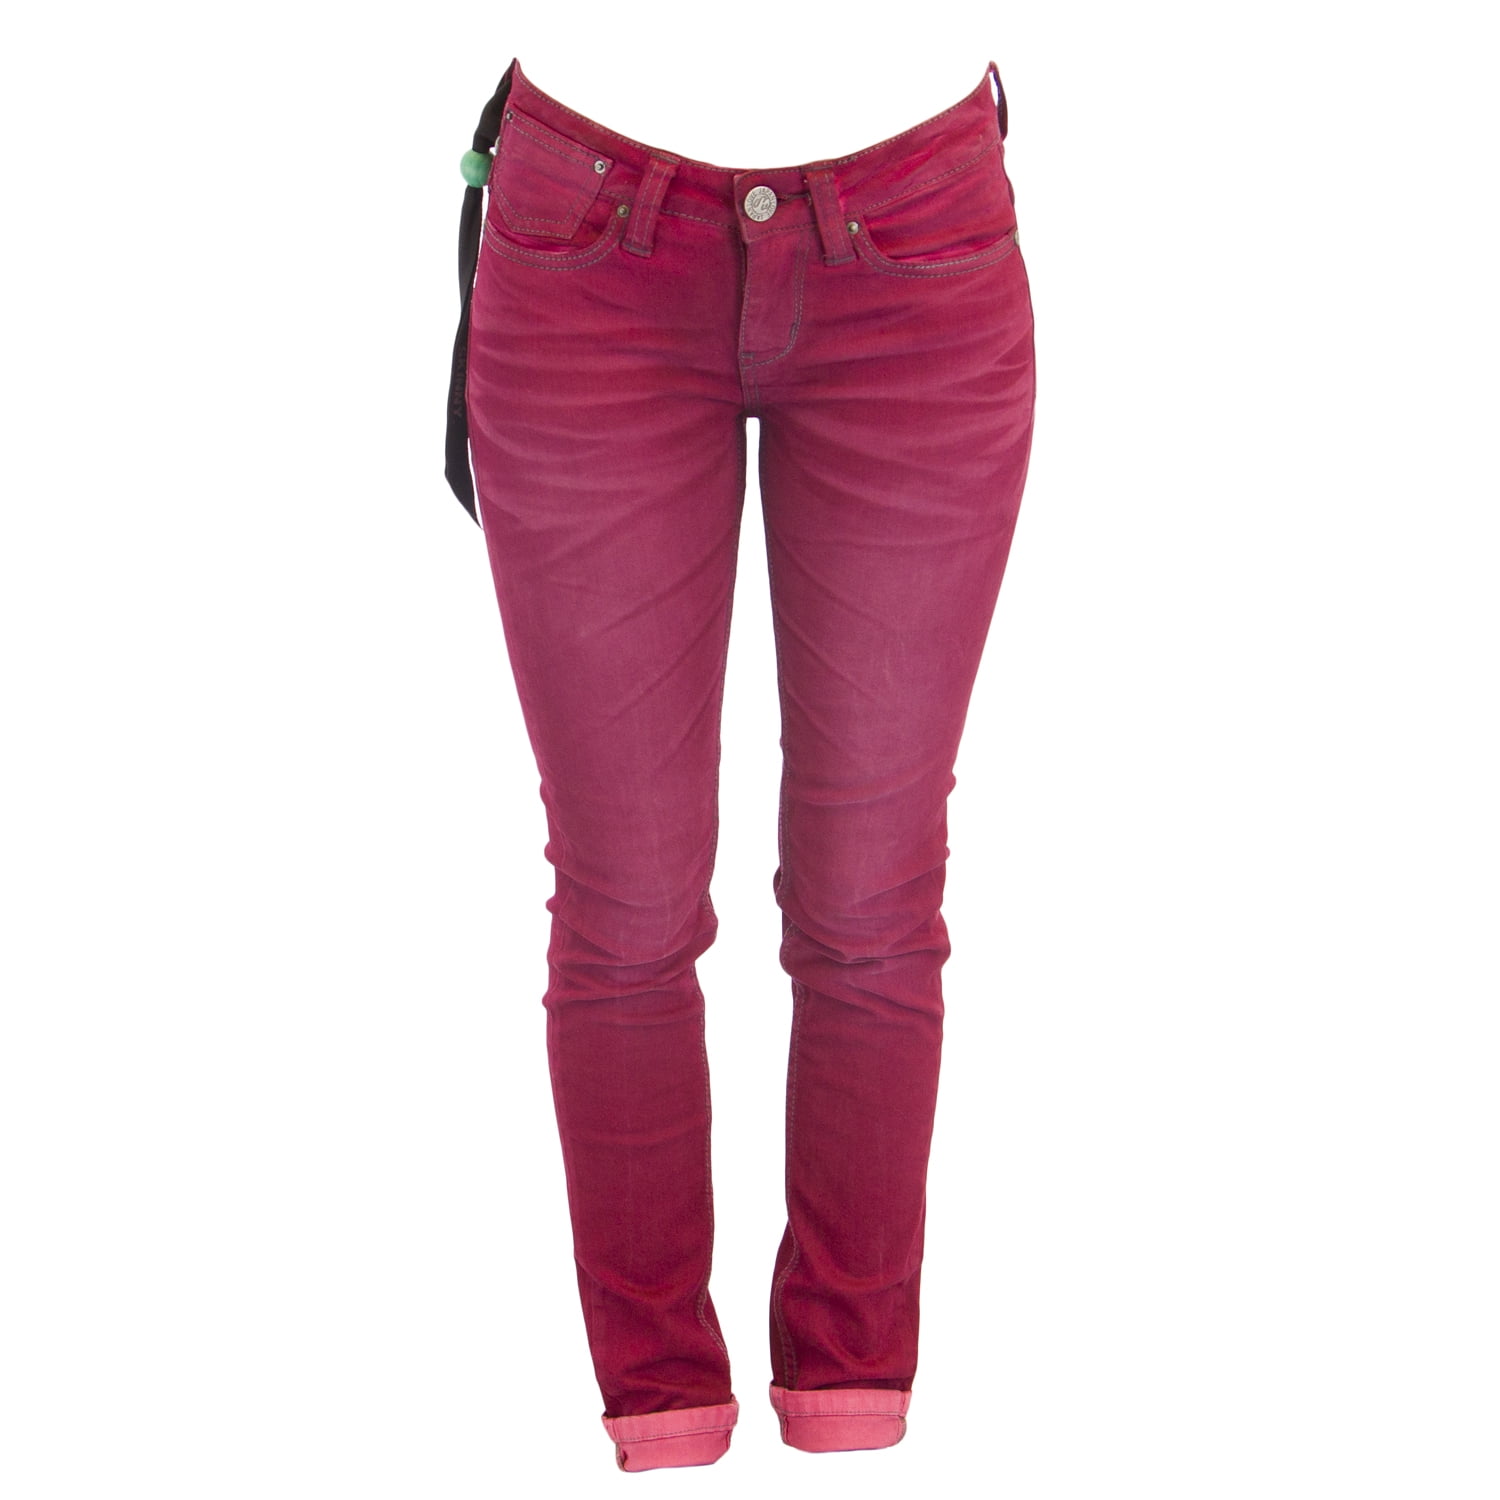 ONE GREEN ELEPHANT Women's Memphis Skinny Jeans XX-Small(W25) Pink ...